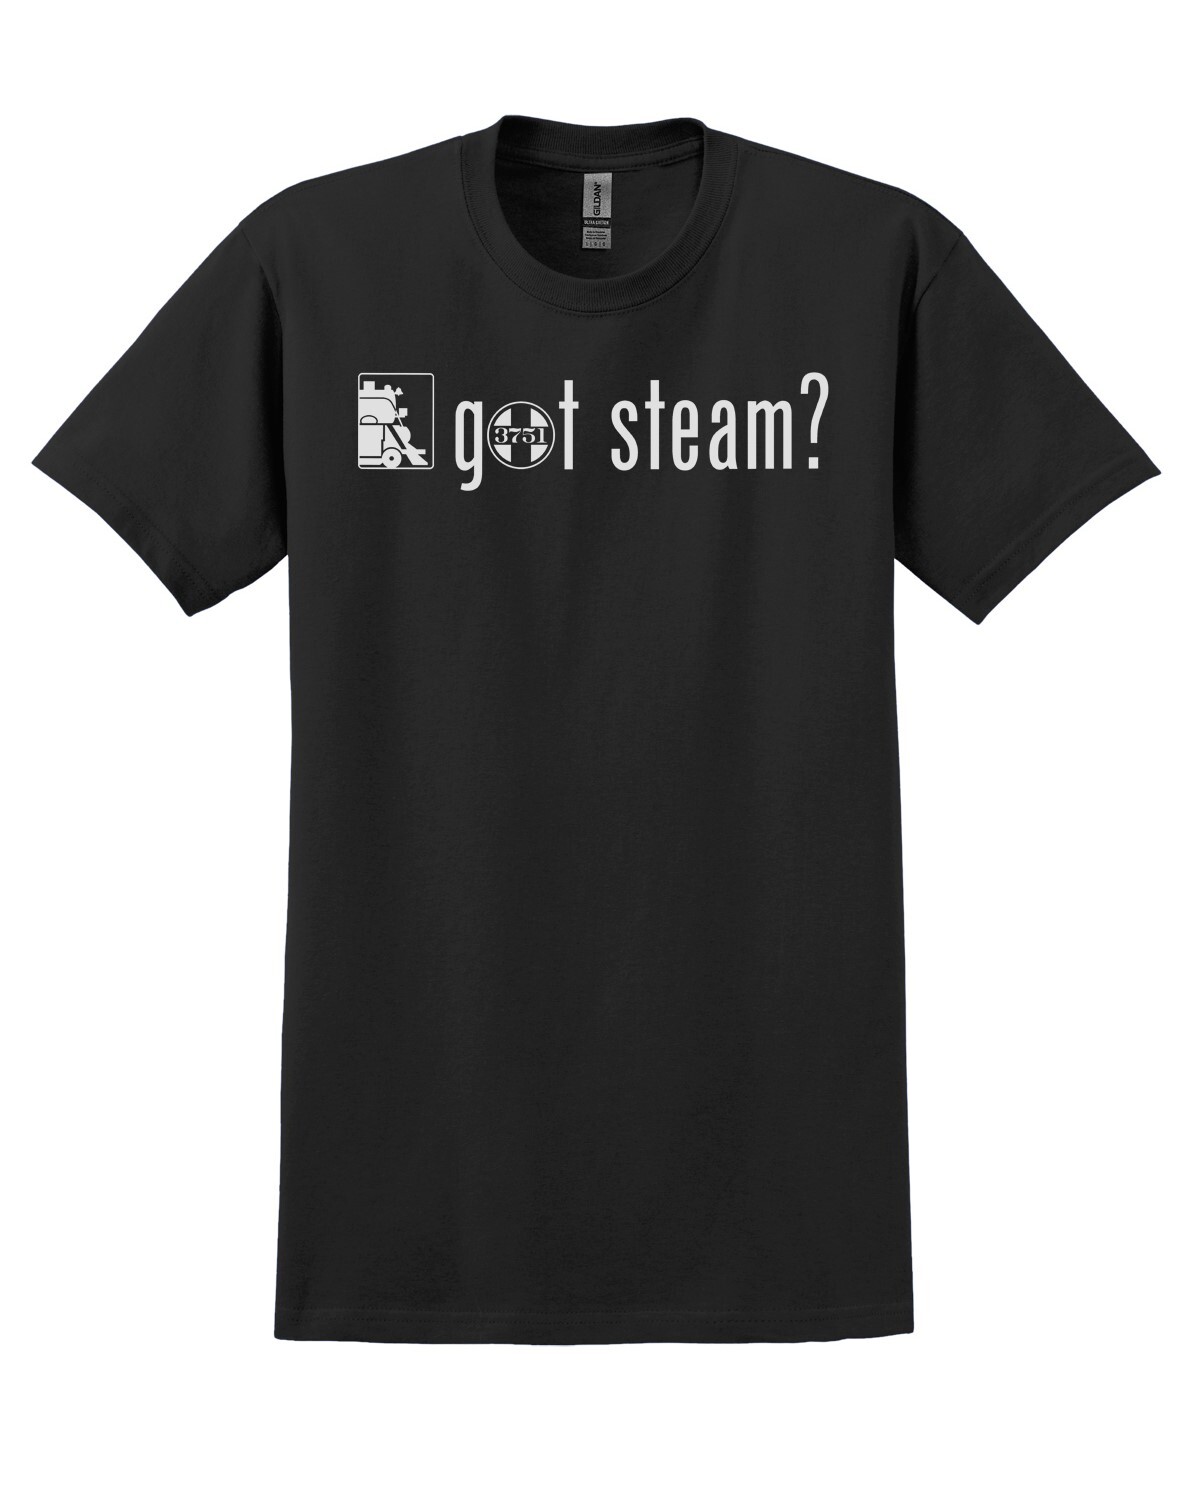 NEW!!! "Got Steam?" - (Black) - X-Large